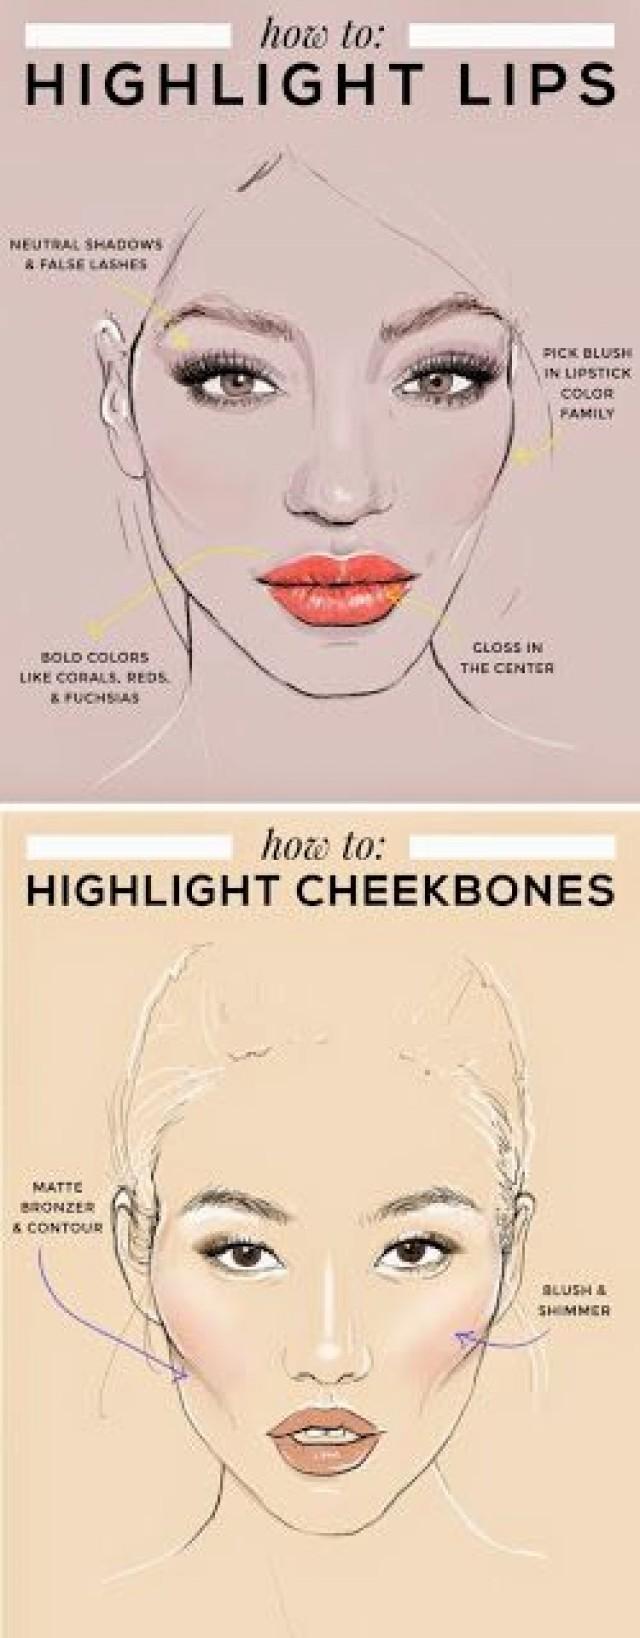 Teenage Fashion Blog: How To Highlight Lips & Cheekbones - Prom Tips ...